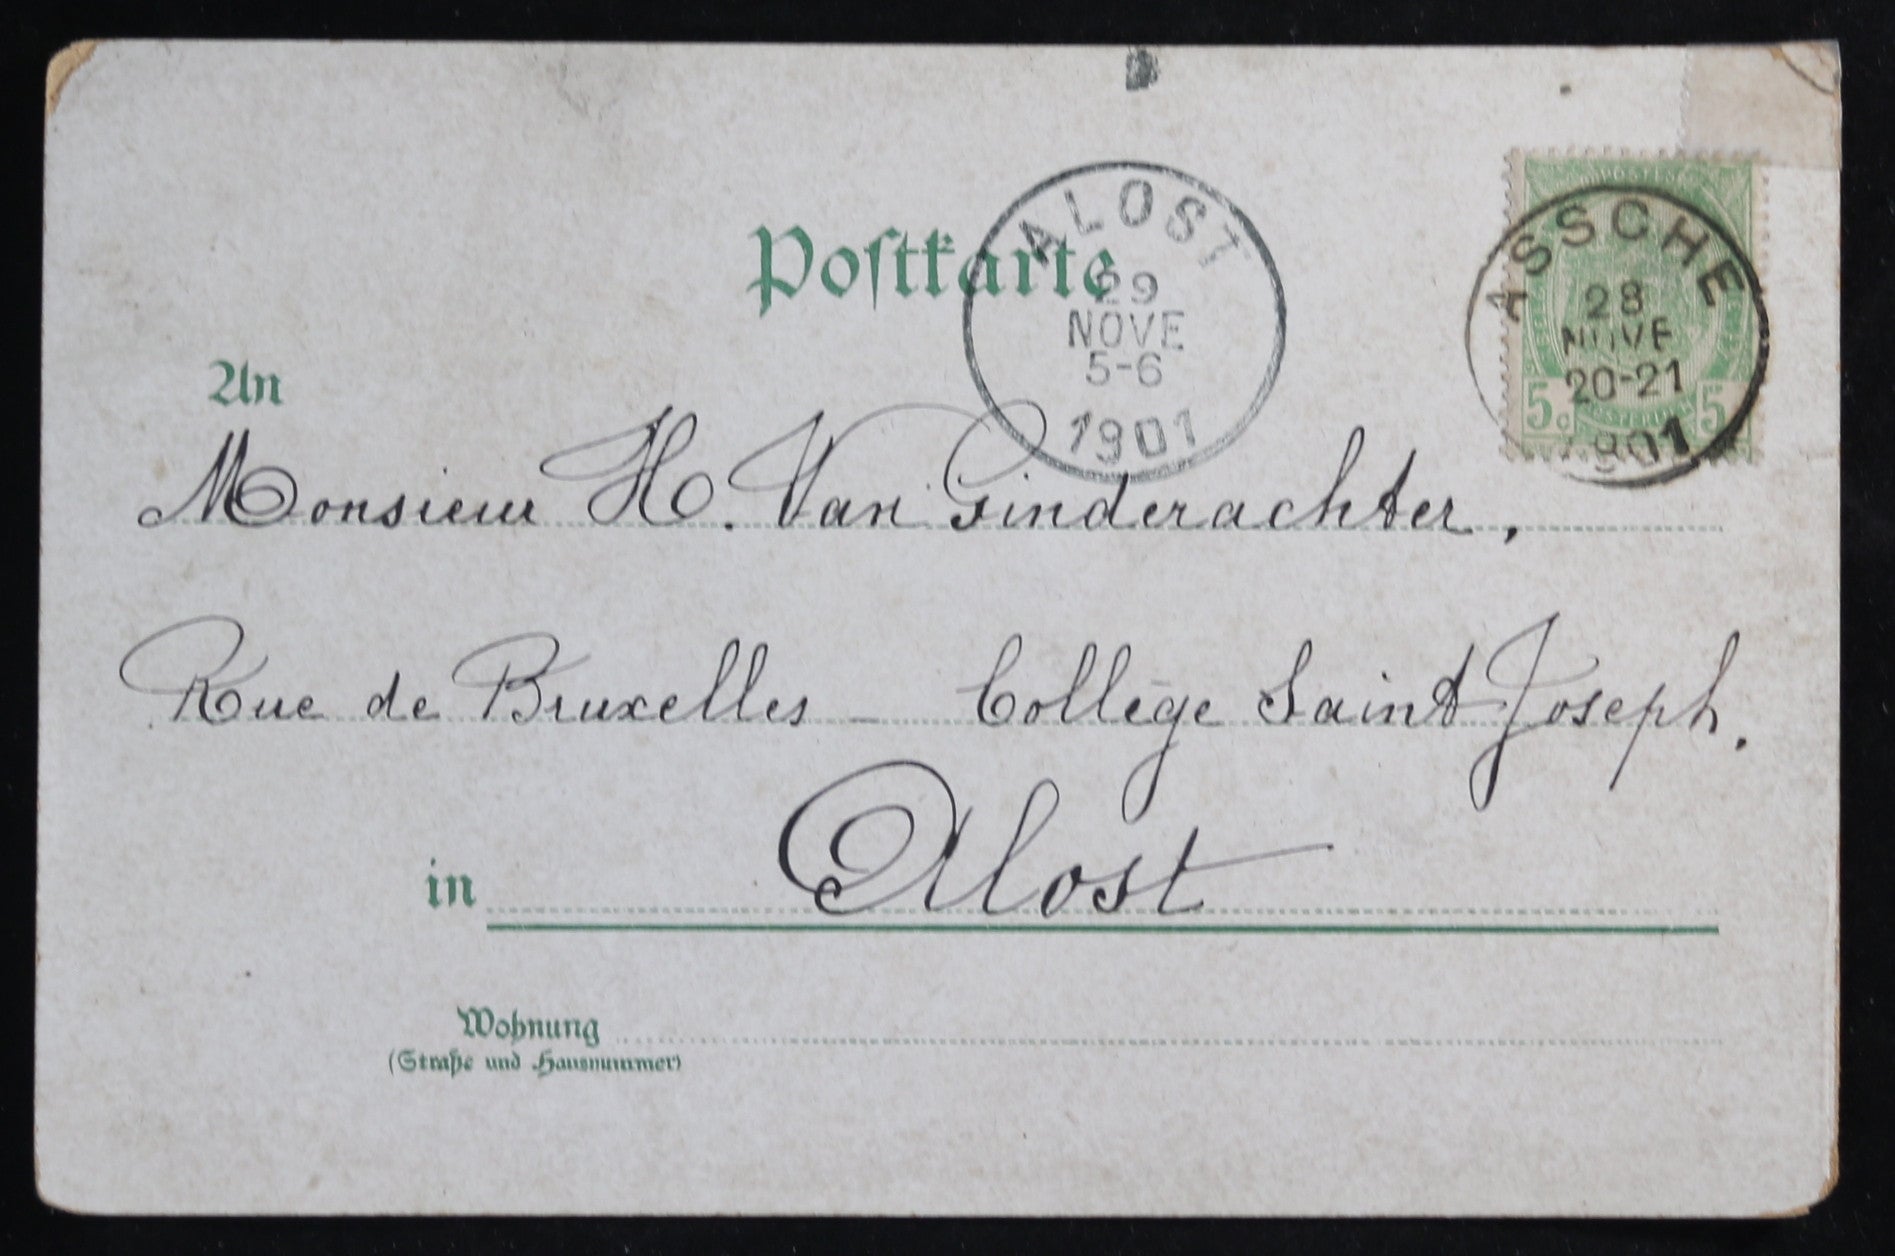 1901 Barnum and Bailey horse jumping postcard (German)